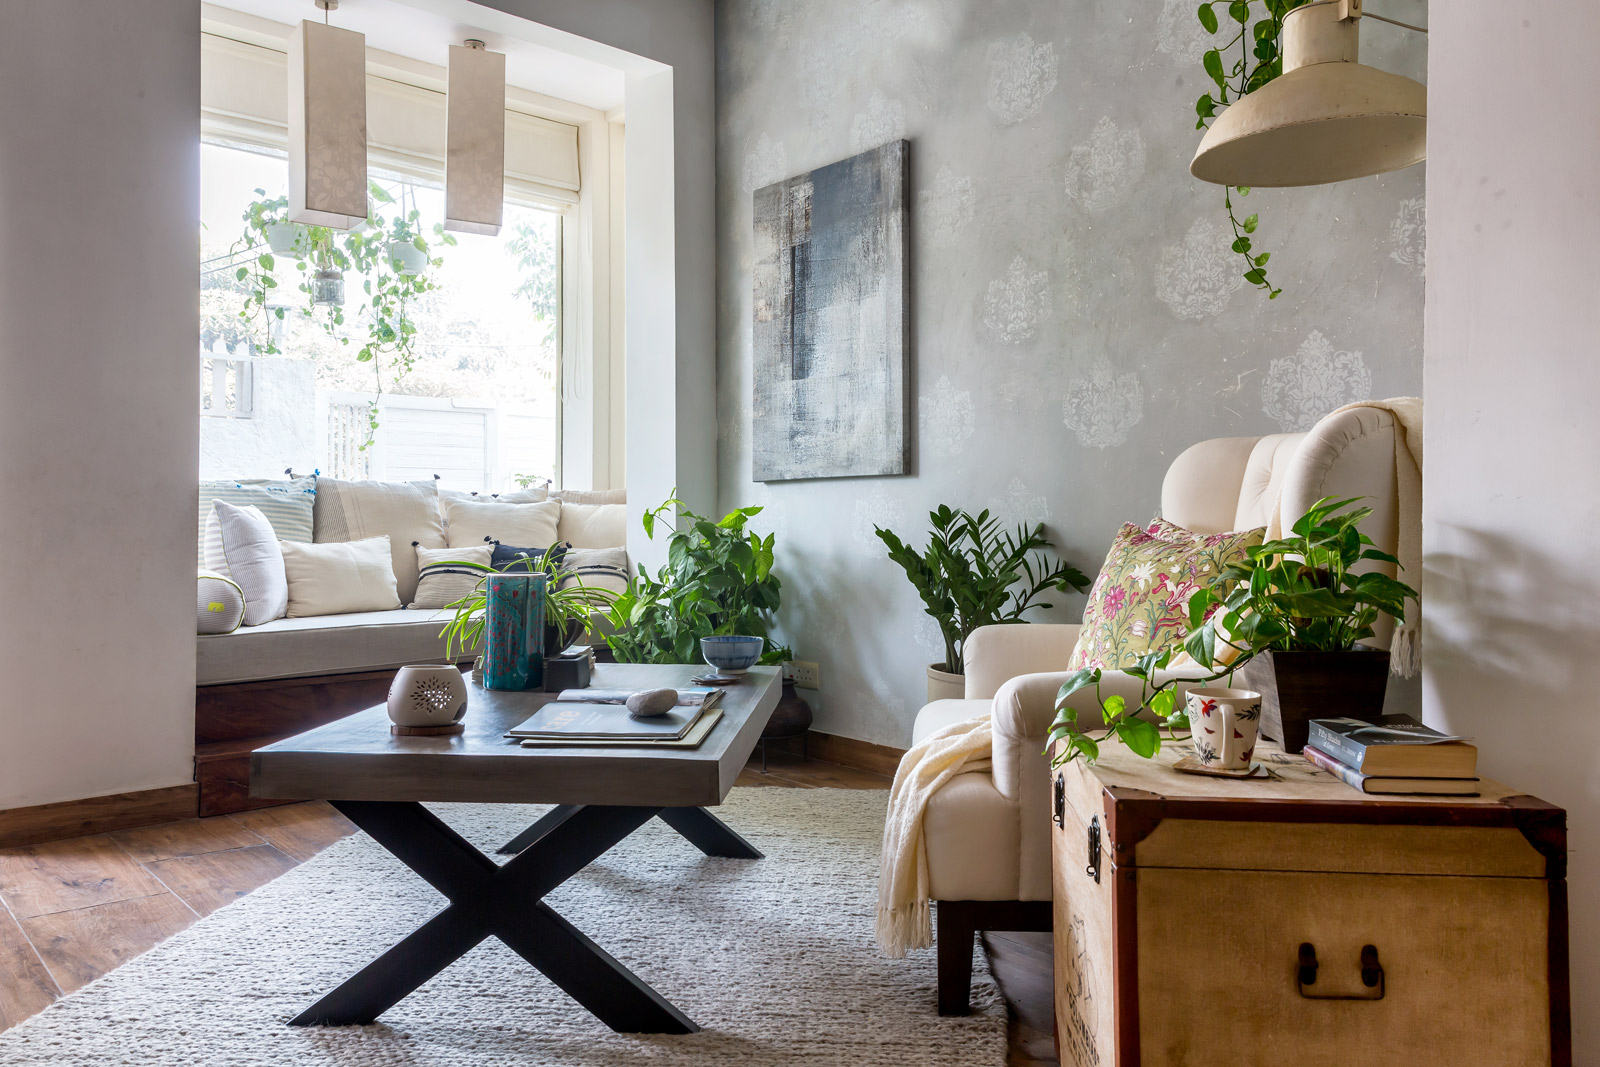 Designing a living room - a cozy interior